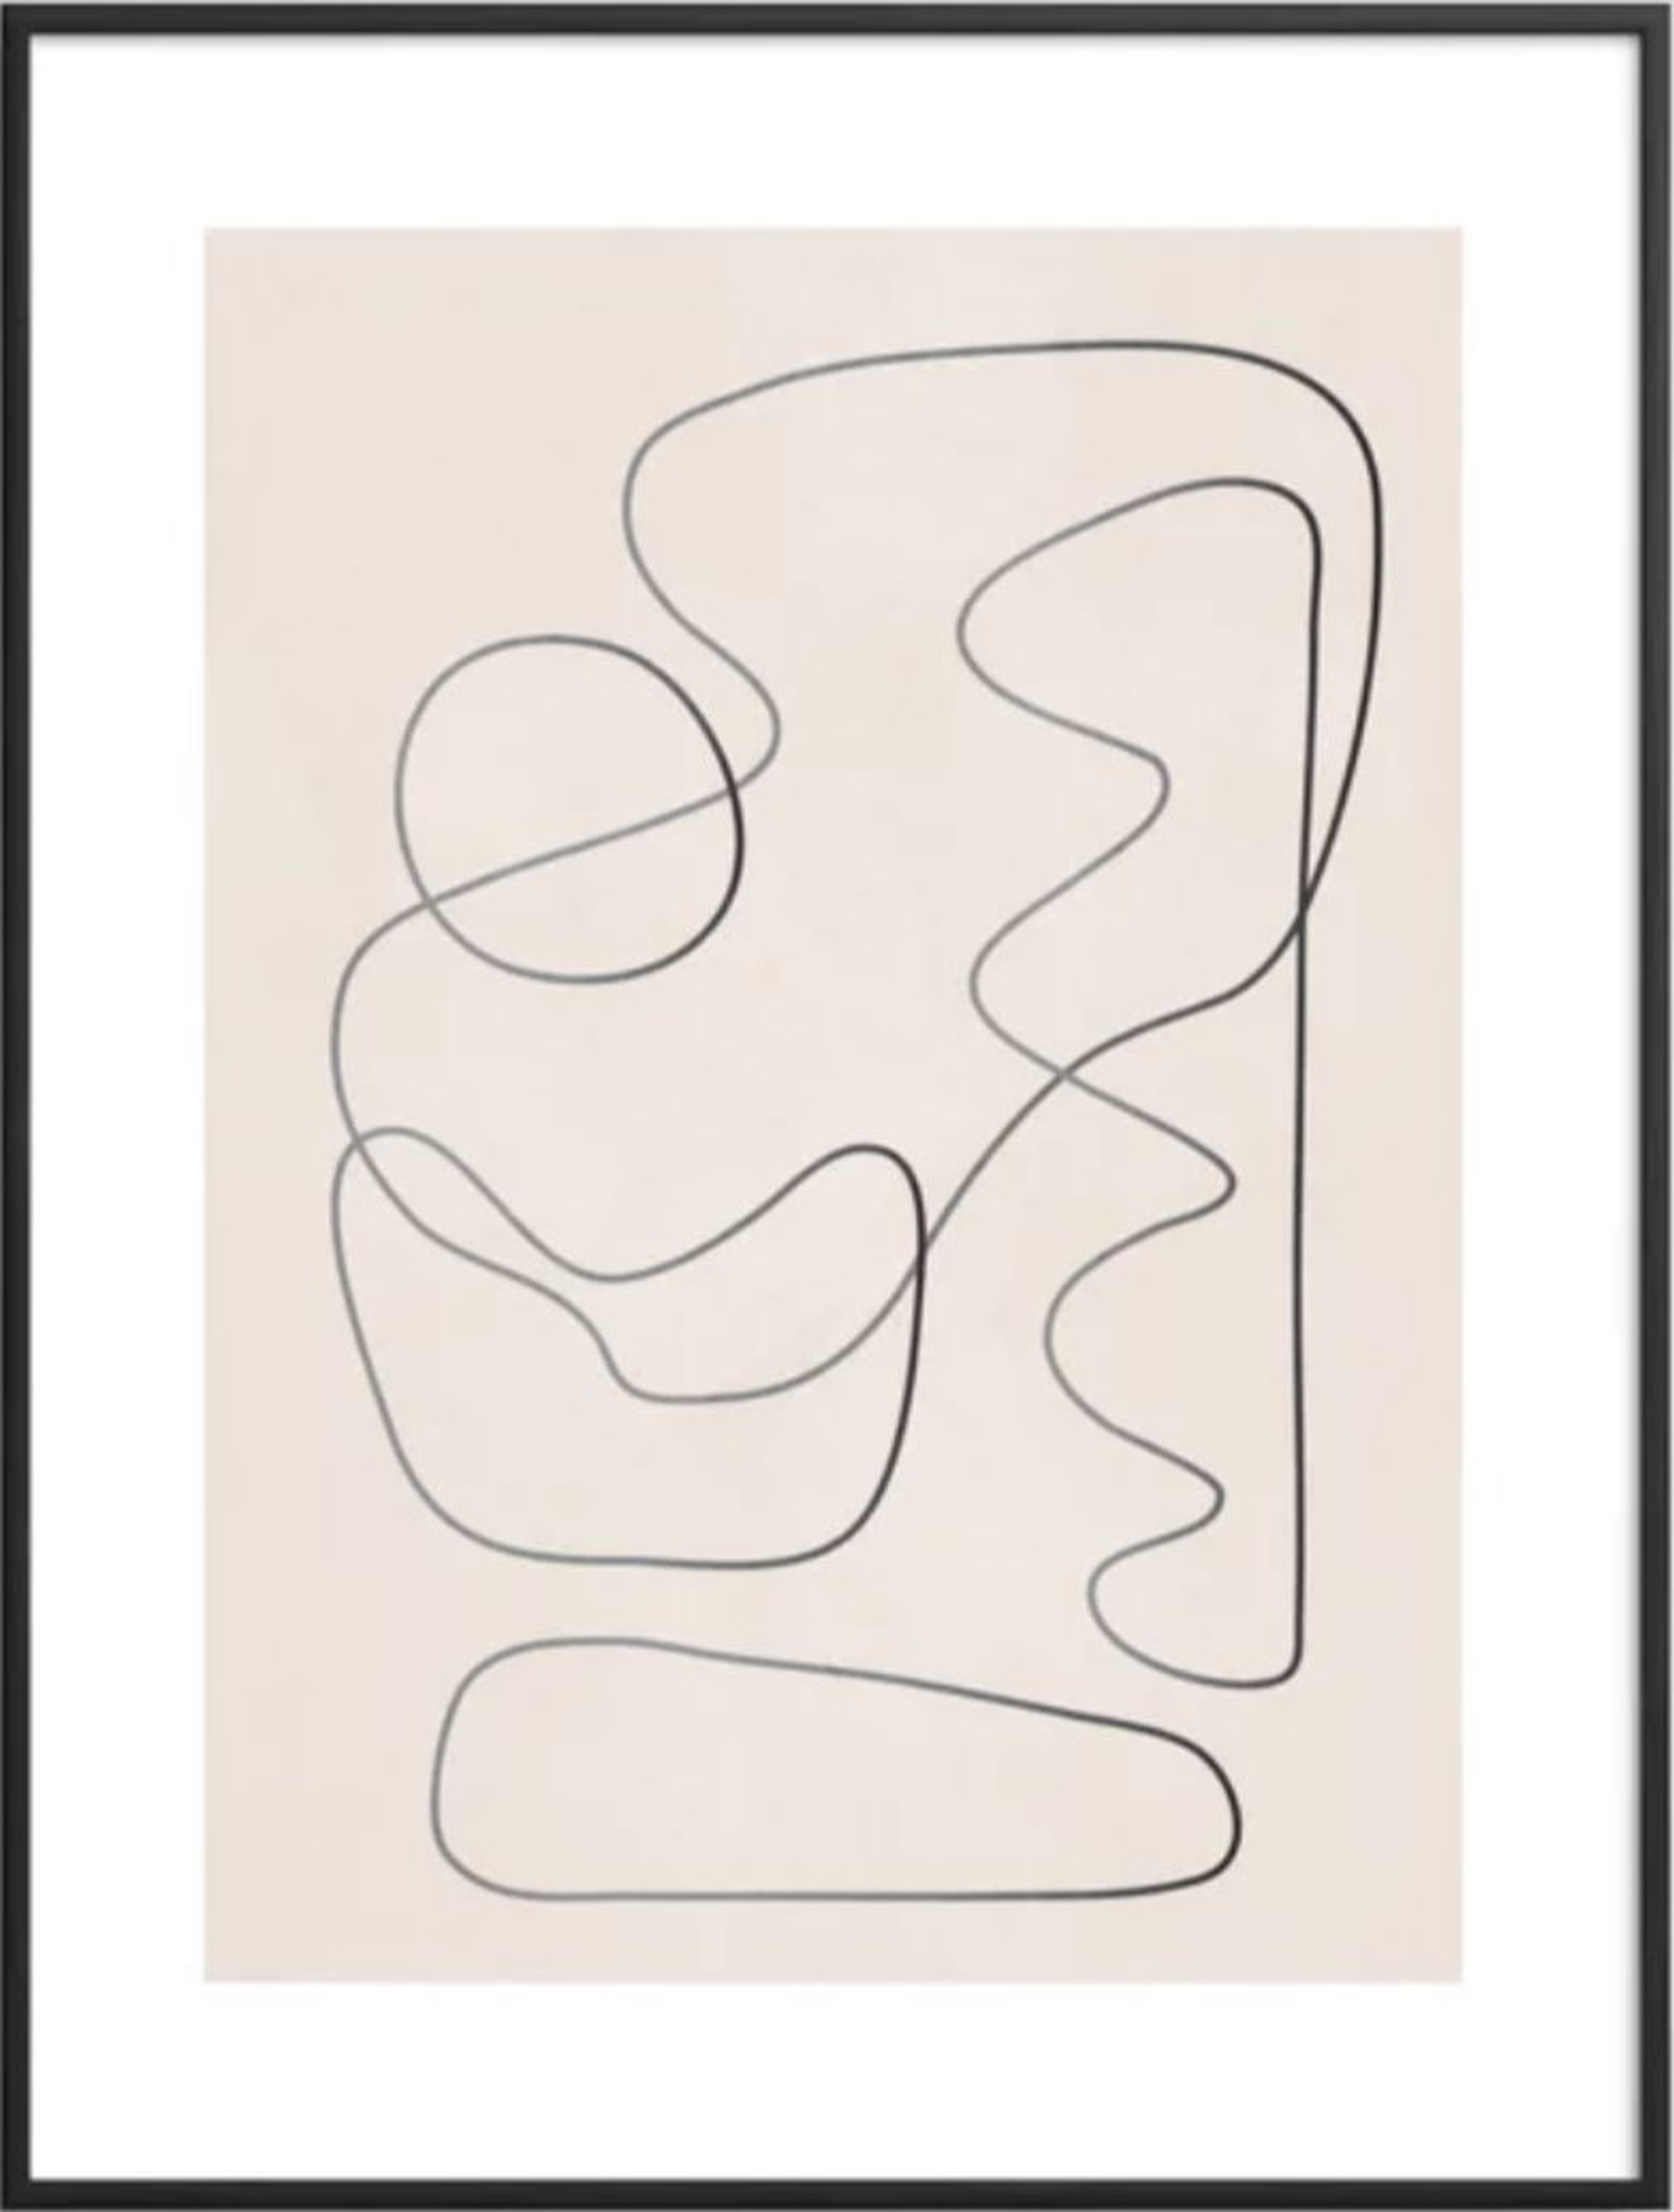 Abstract Line III, Framed Art Print, 24x36 - Society6